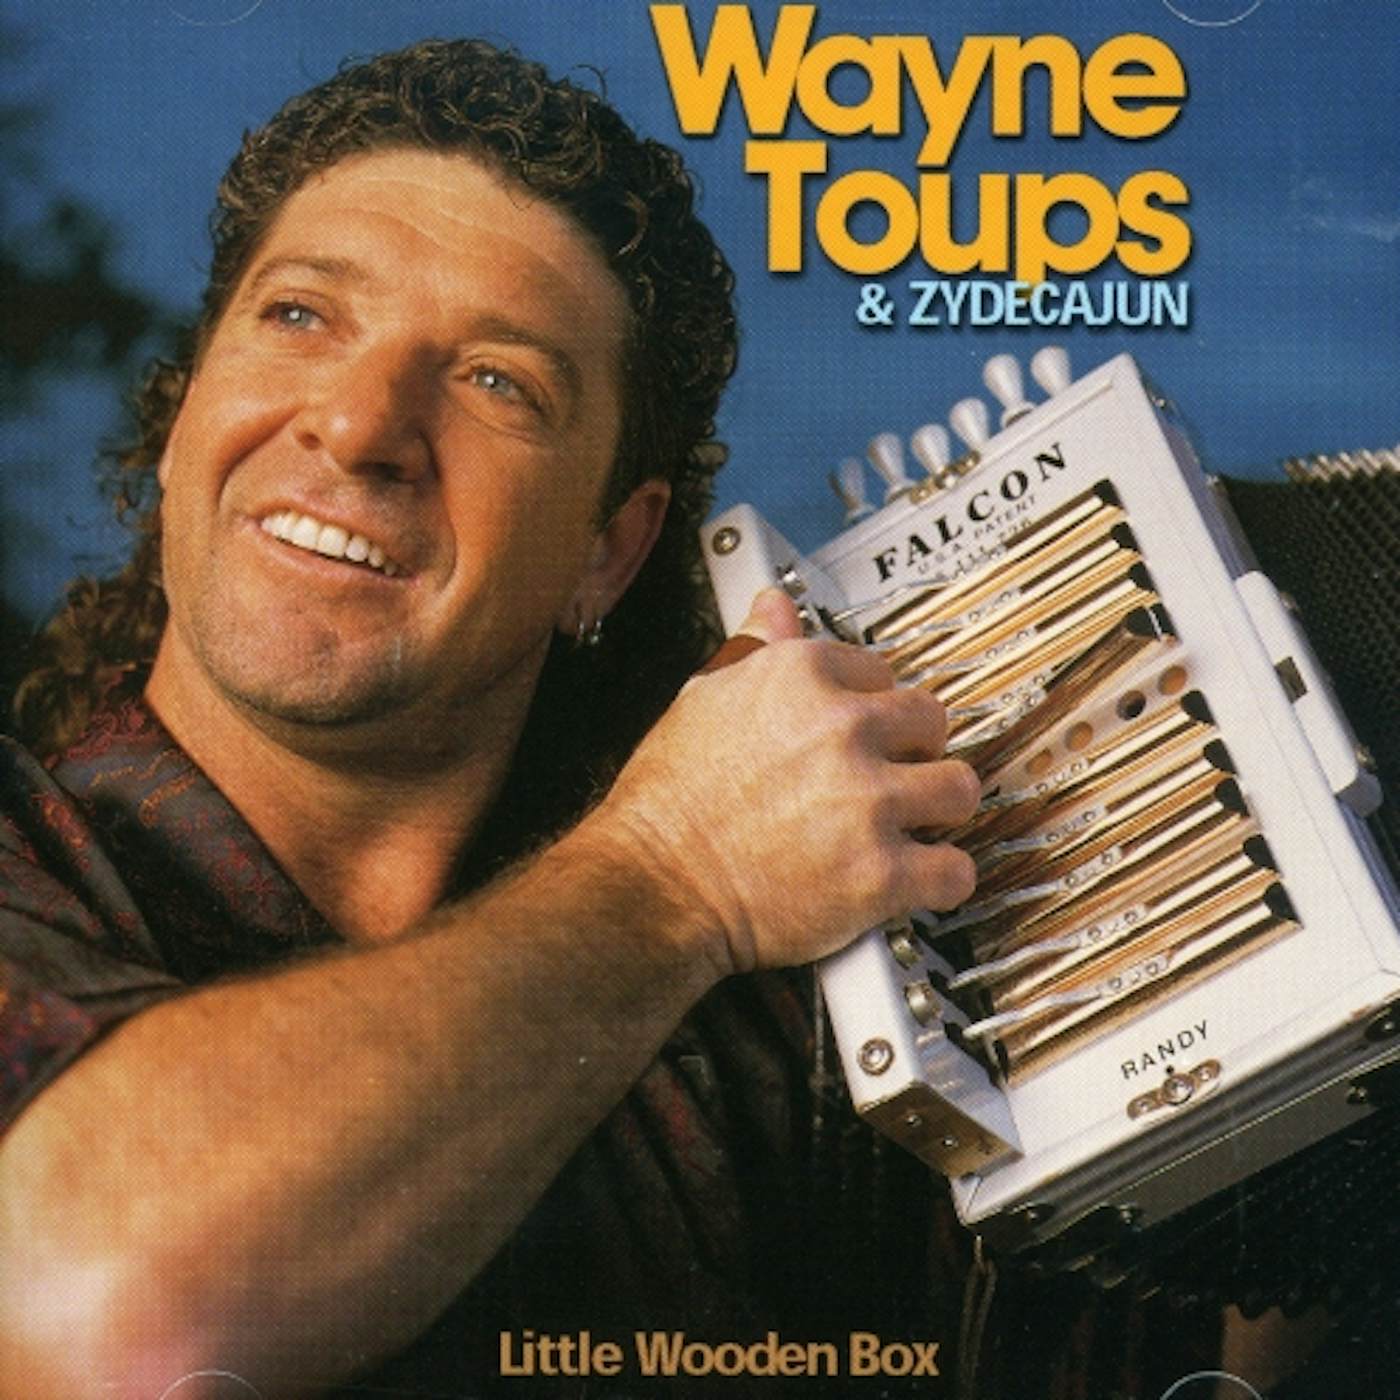 Wayne Toups & Zydecajun LITTLE WOODEN BOX CD